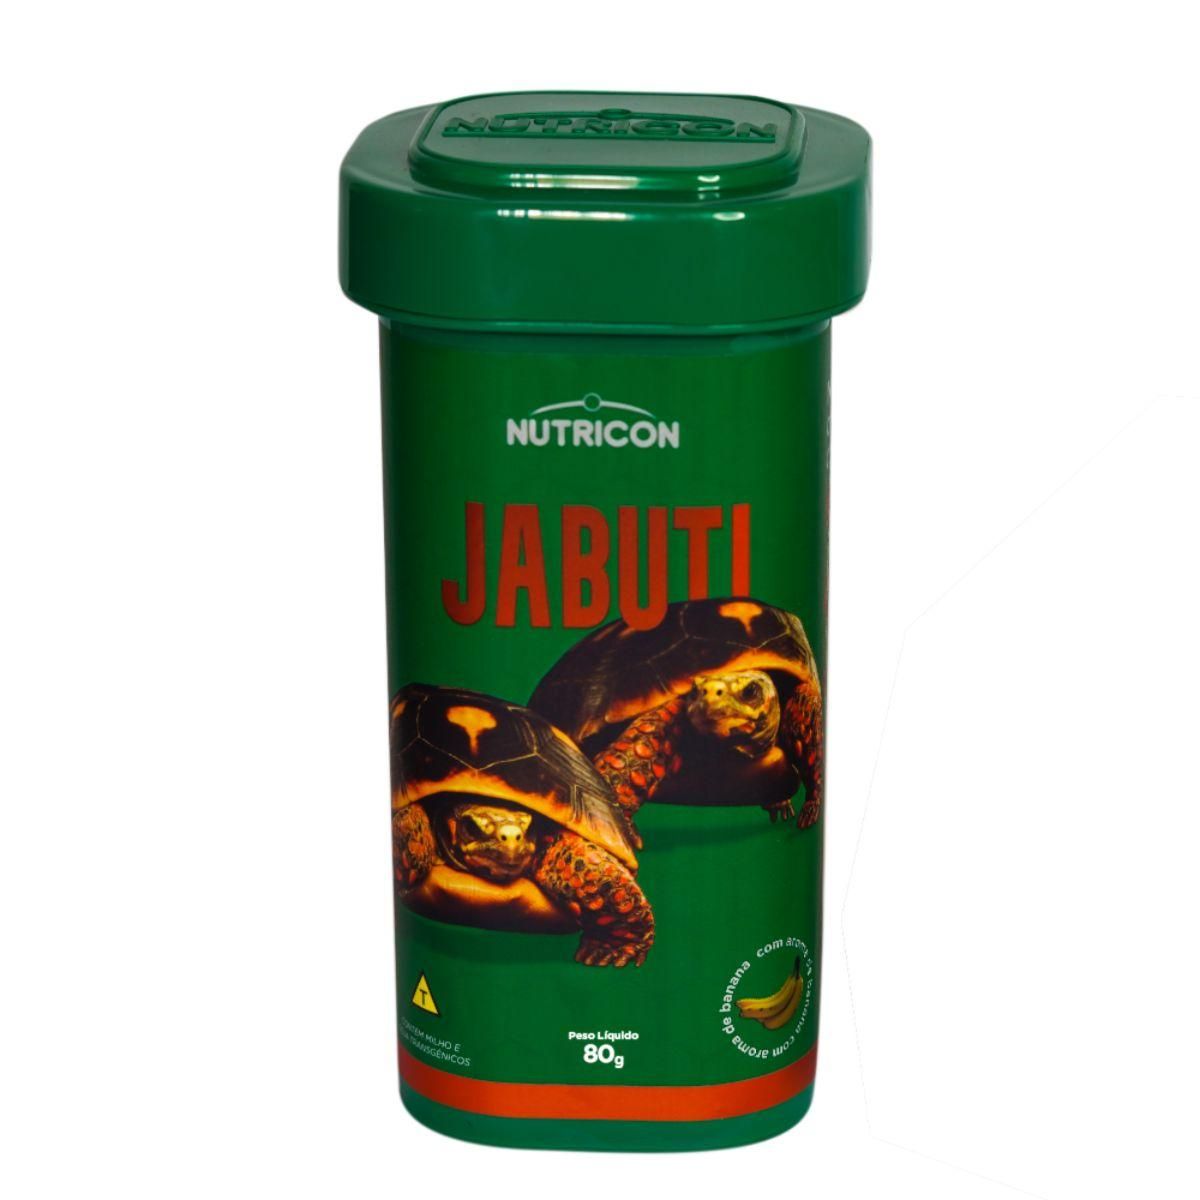 Nutricon Jabuti 80g